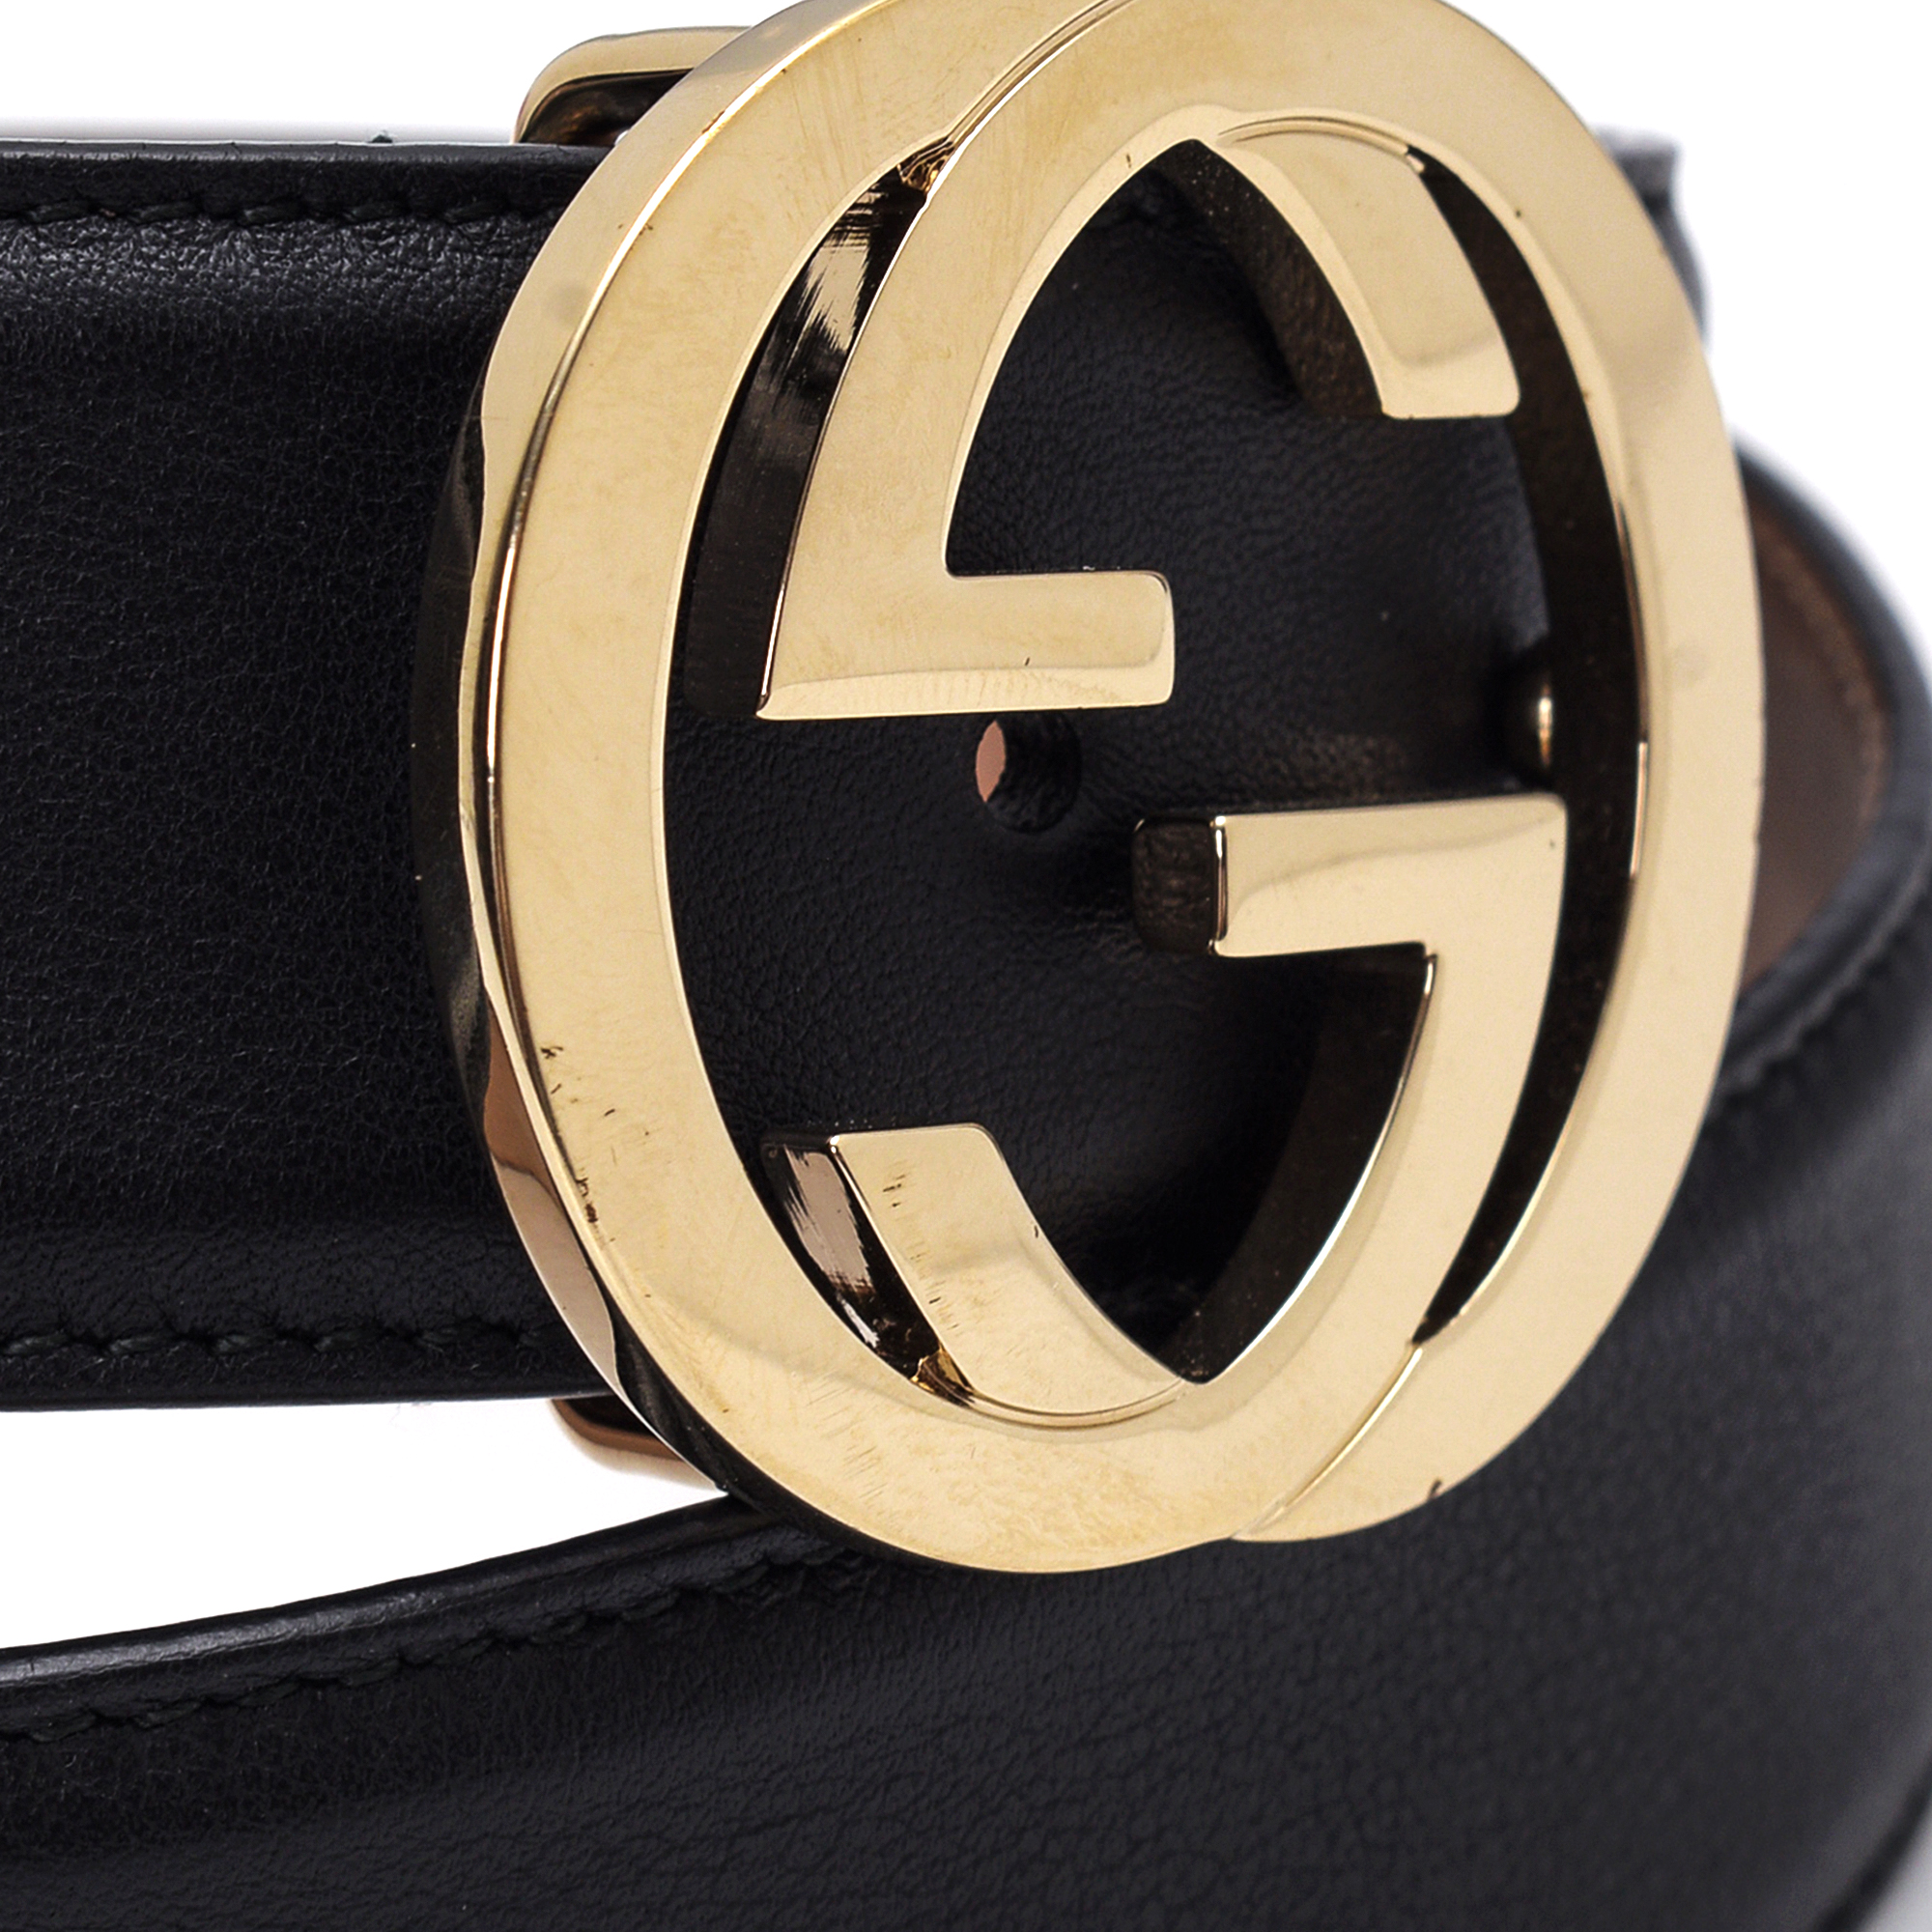 Gucci - Black Leather GG Buckle Belt